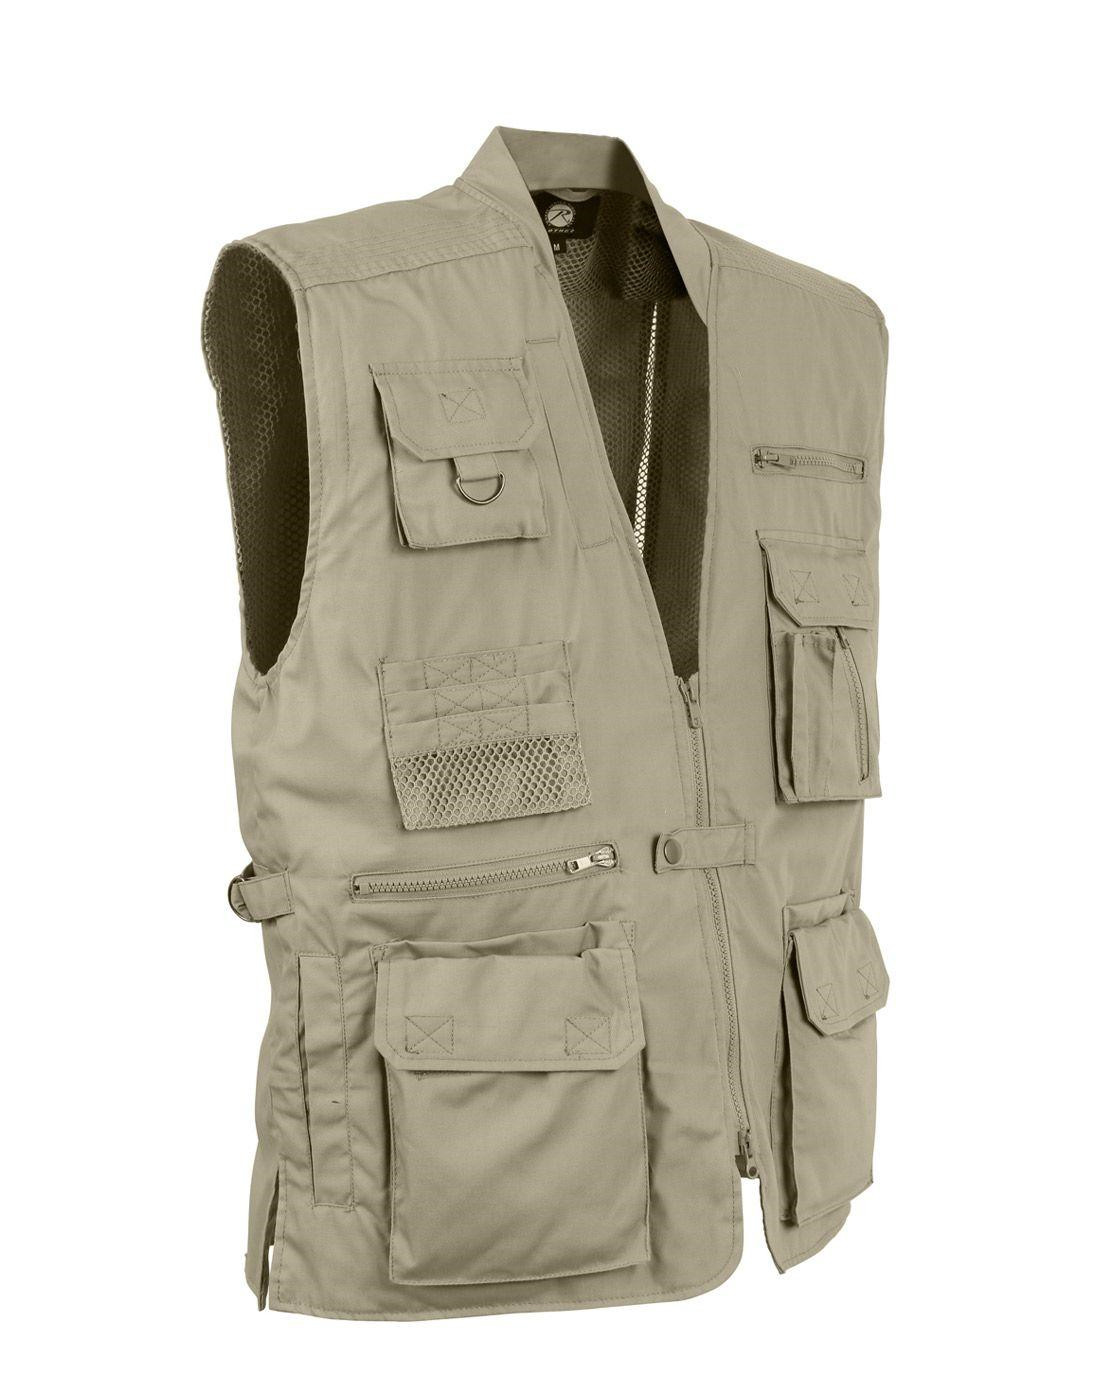 7: Rothco Low Profile Cargo Vest (Khaki, XL)